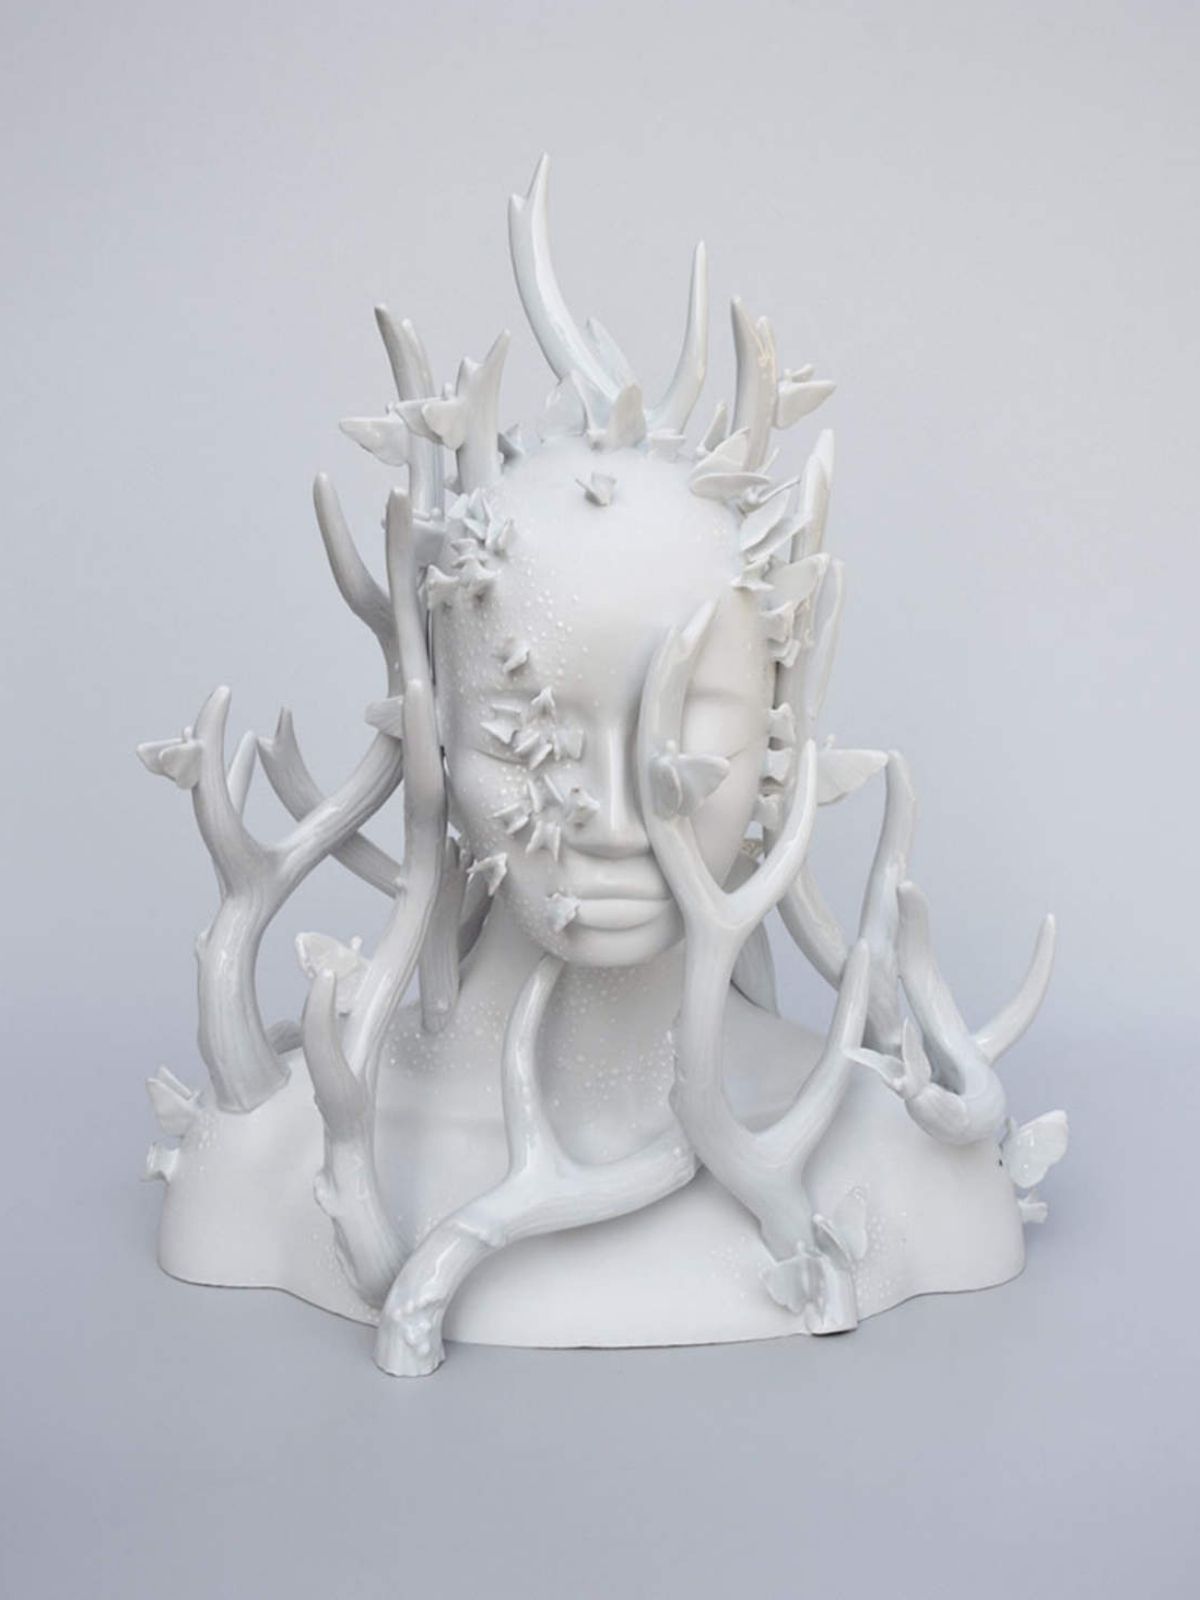 Contemporary Flower-Faced Sculptures That Shape the Future of Ceramics - gallery 2.1 - juliette clovis - on thursd